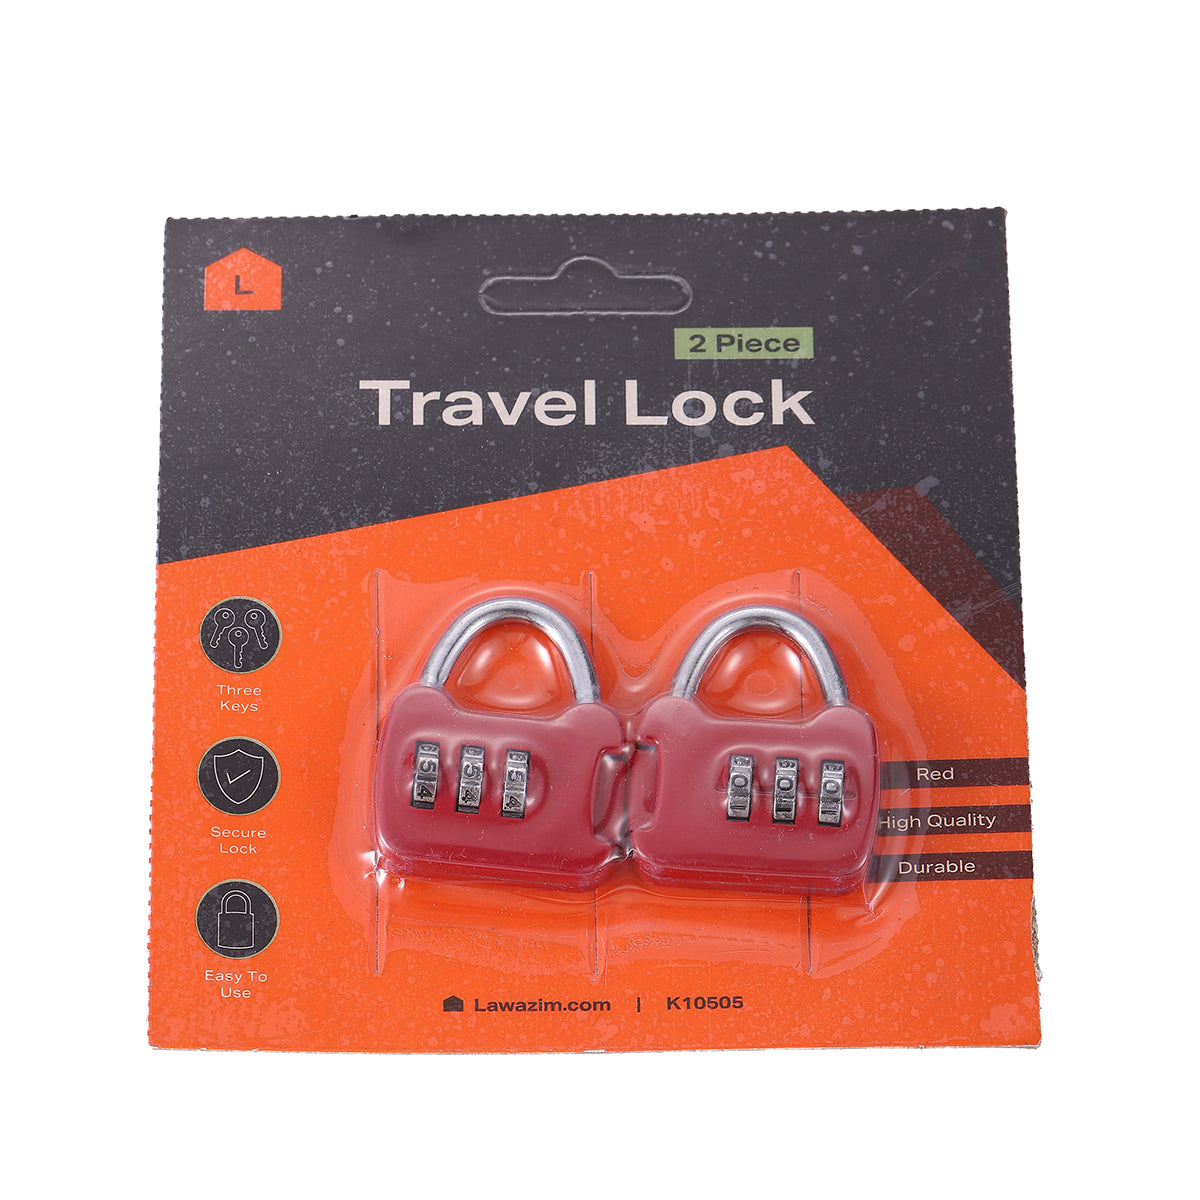 2-Piece Travel Lock - Red